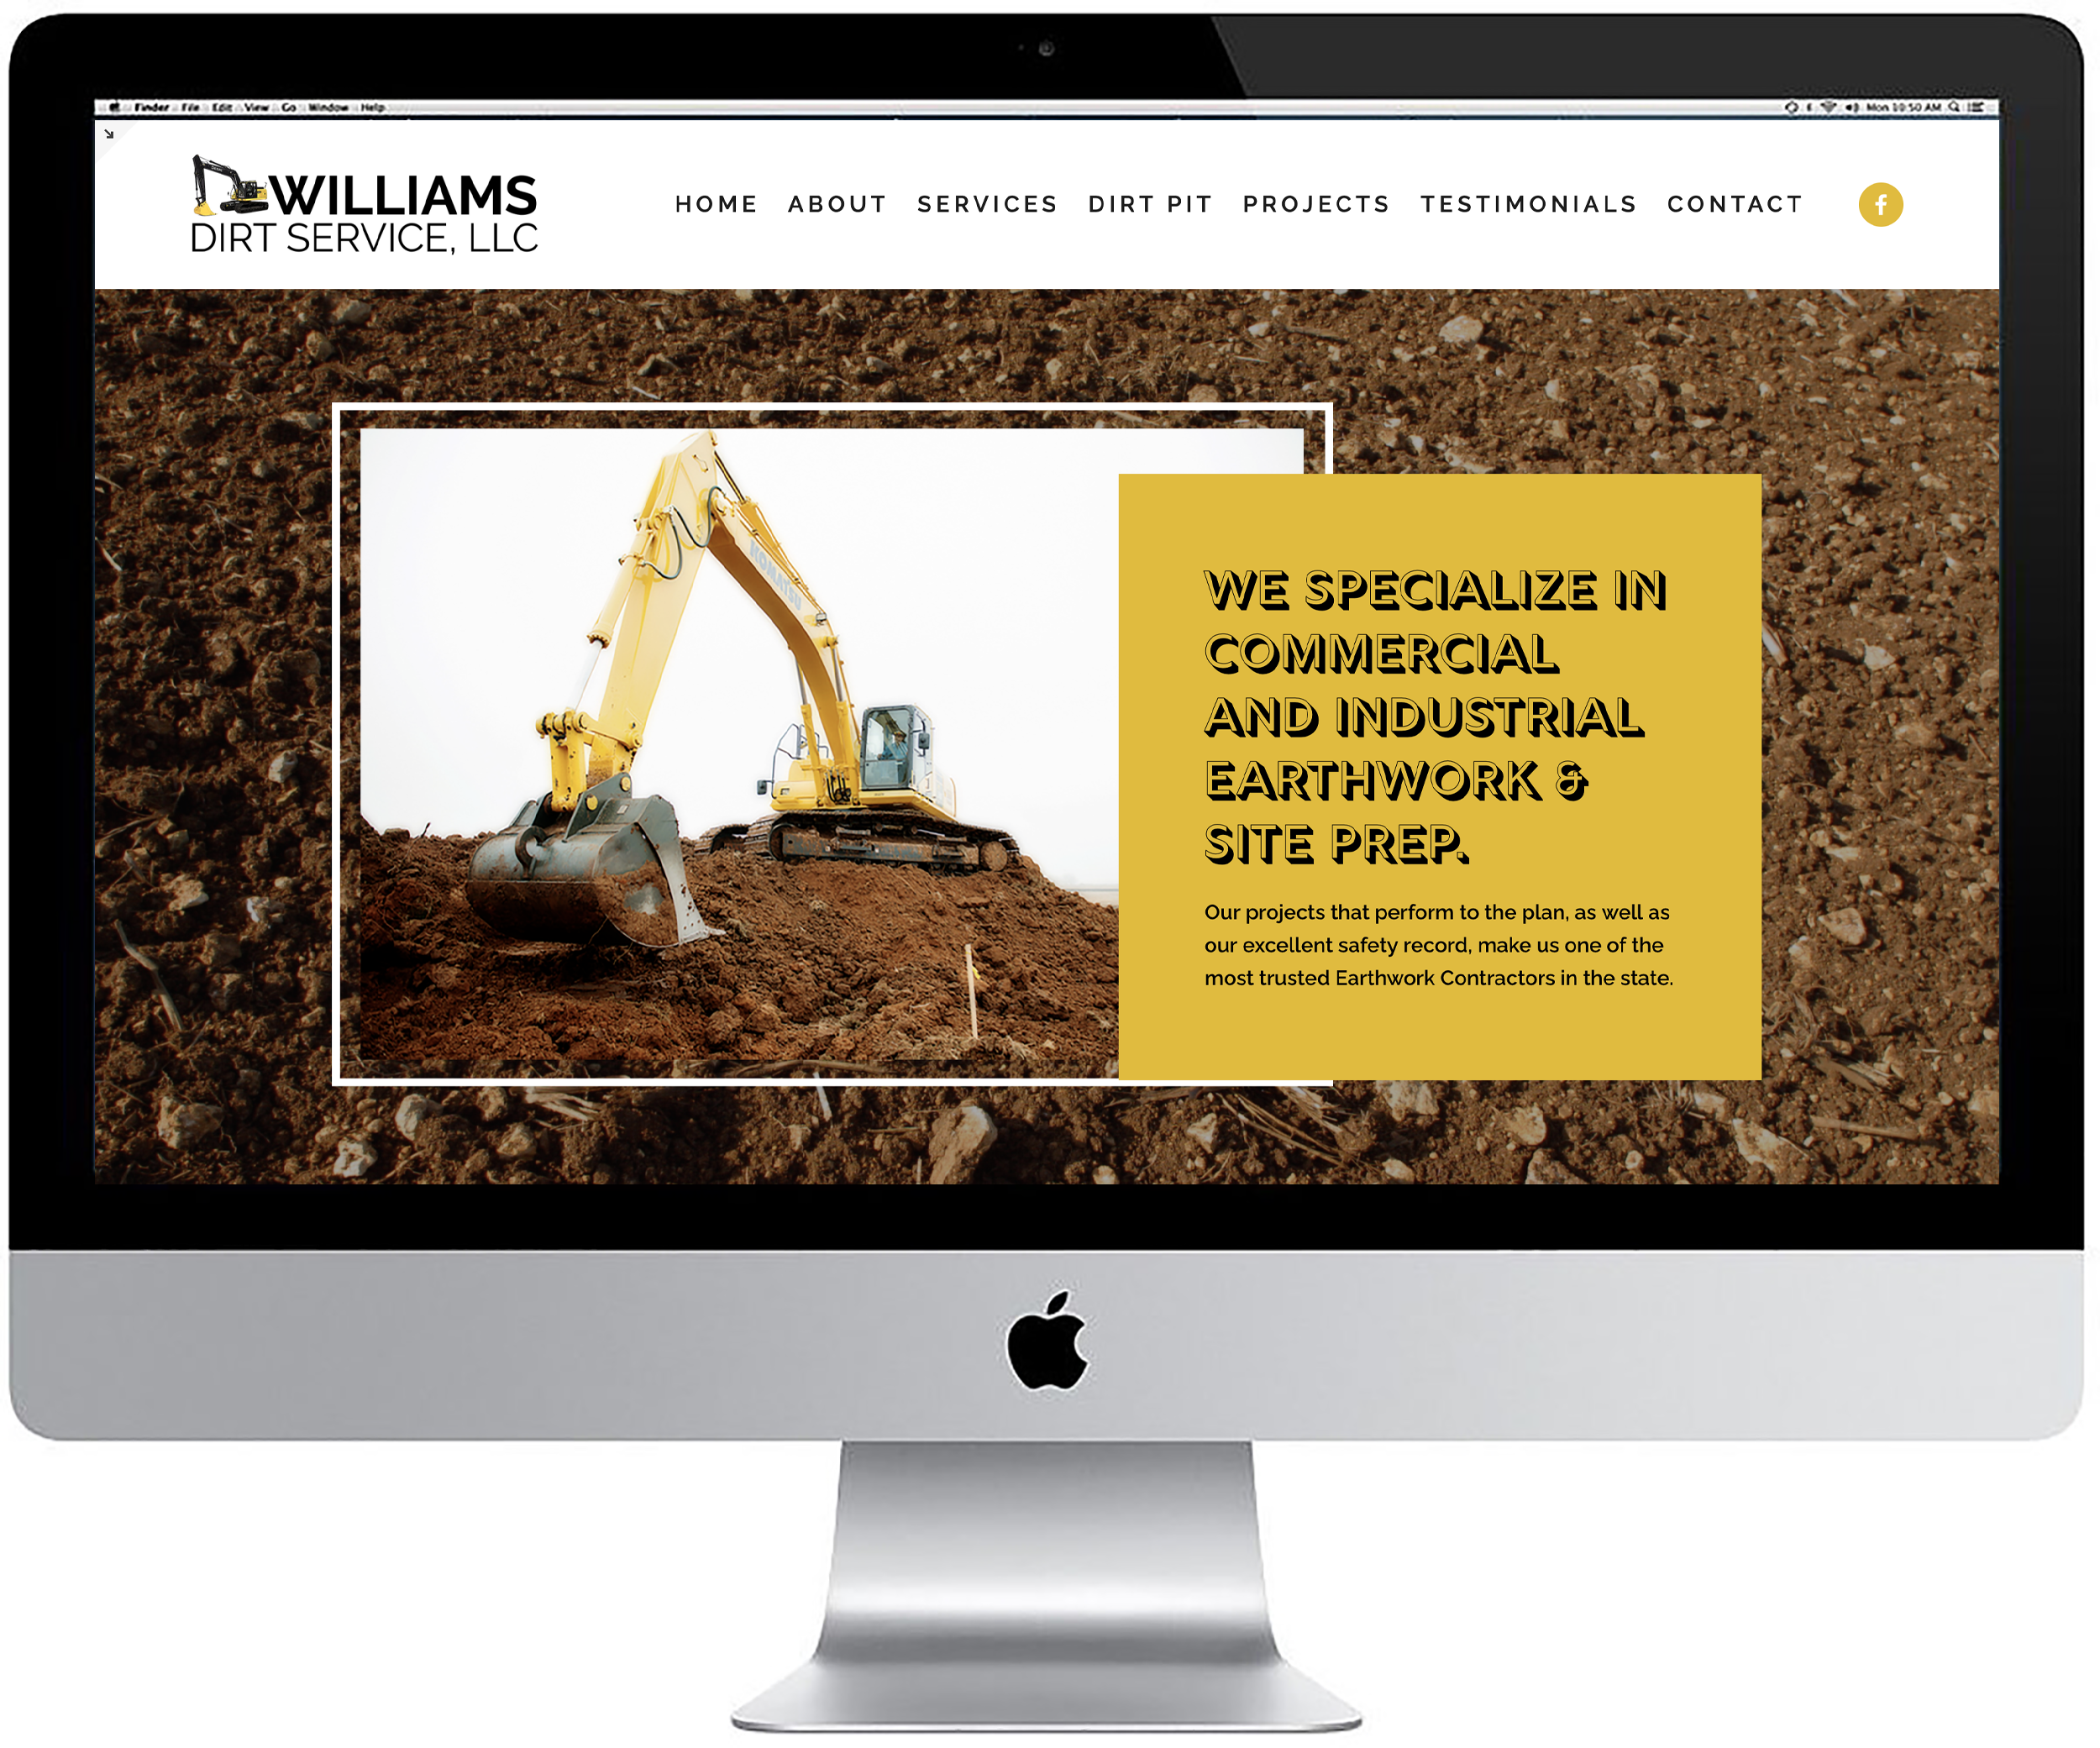 Williams Dirt Service